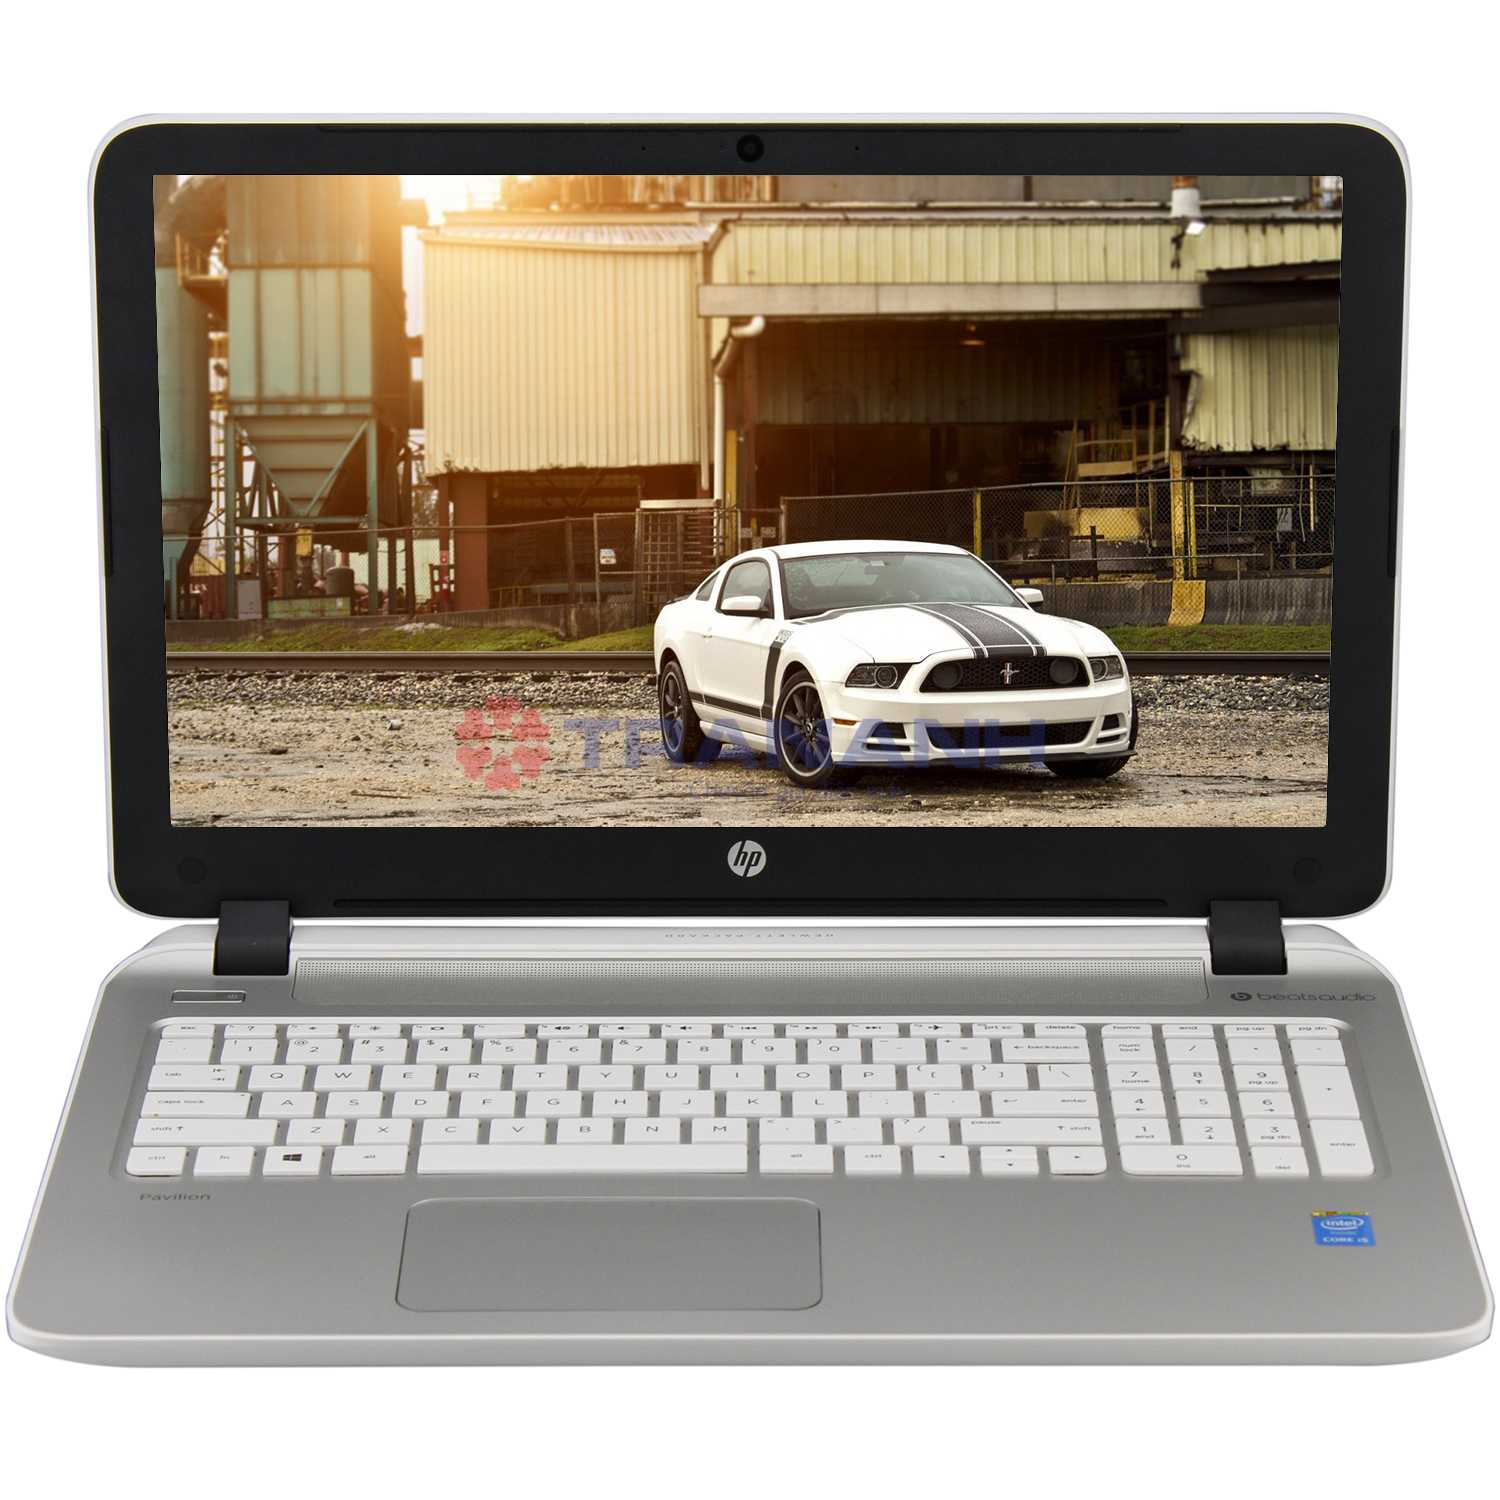 Laptop HP Pavilion 15-ab033TU M4X72PA - Intel Core i3 5010U, 4GB RAM, 500GB HDD, Intel HD Graphics 4400, 15.6Inch